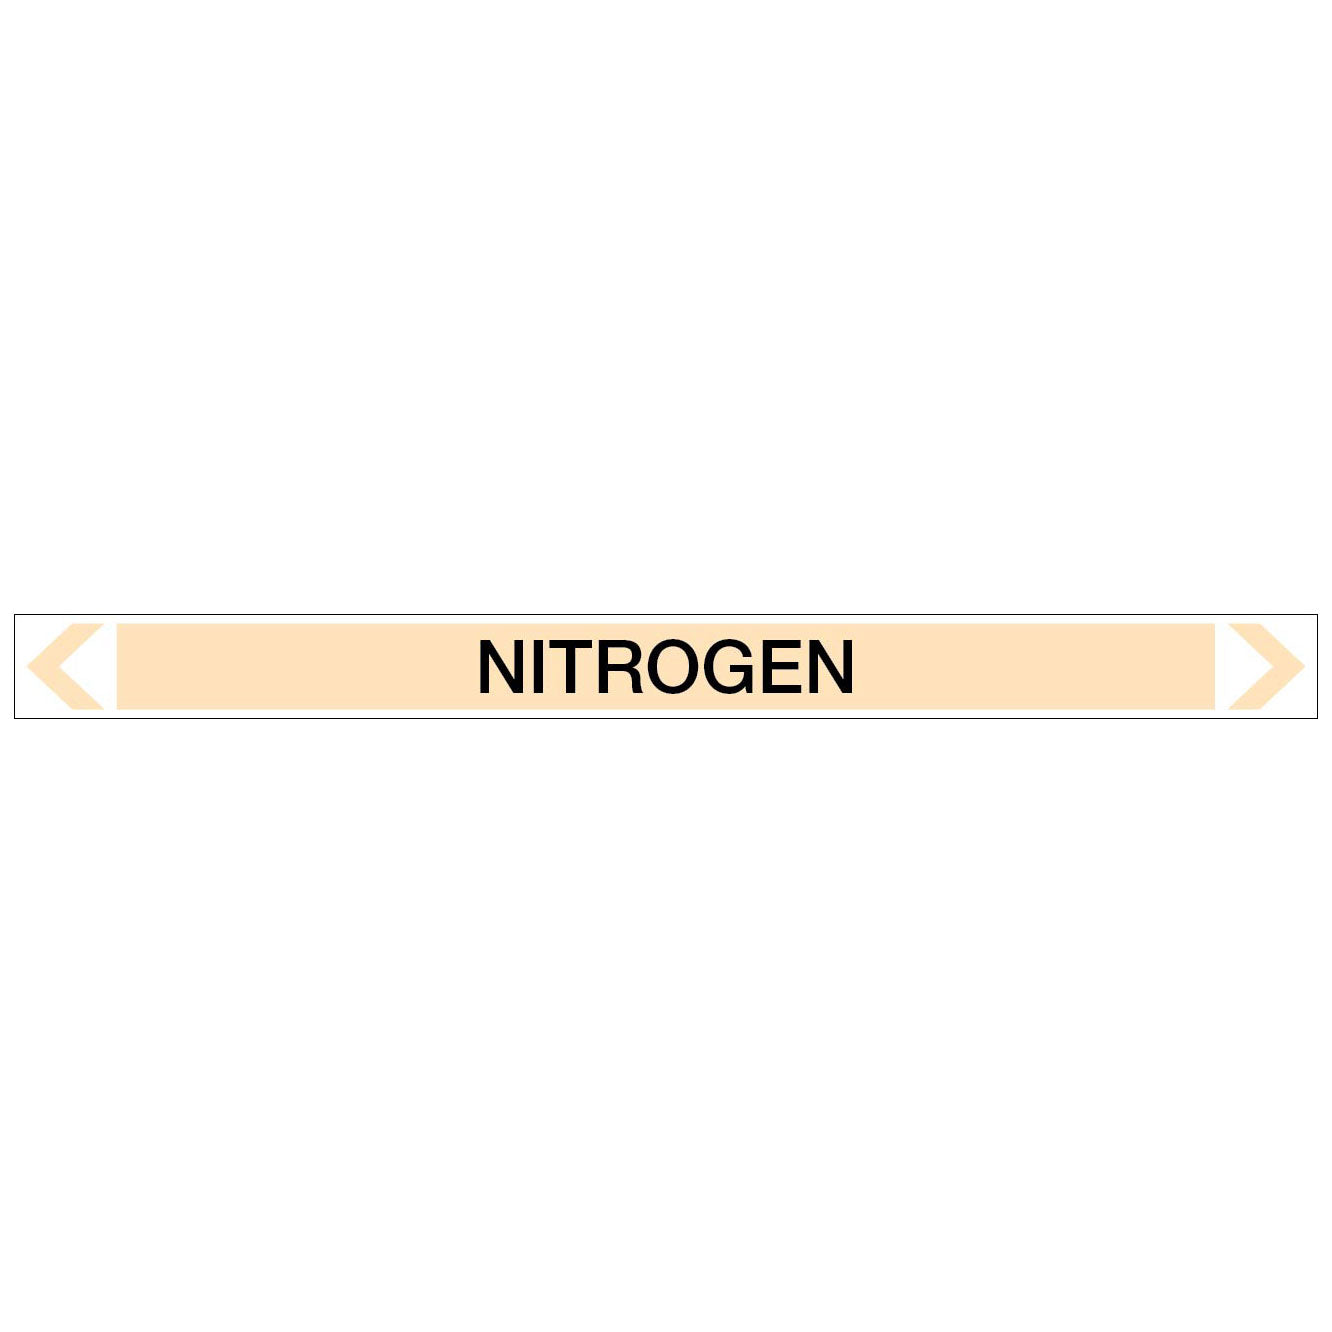 Gases - Nitrogen - Pipe Marker Sticker